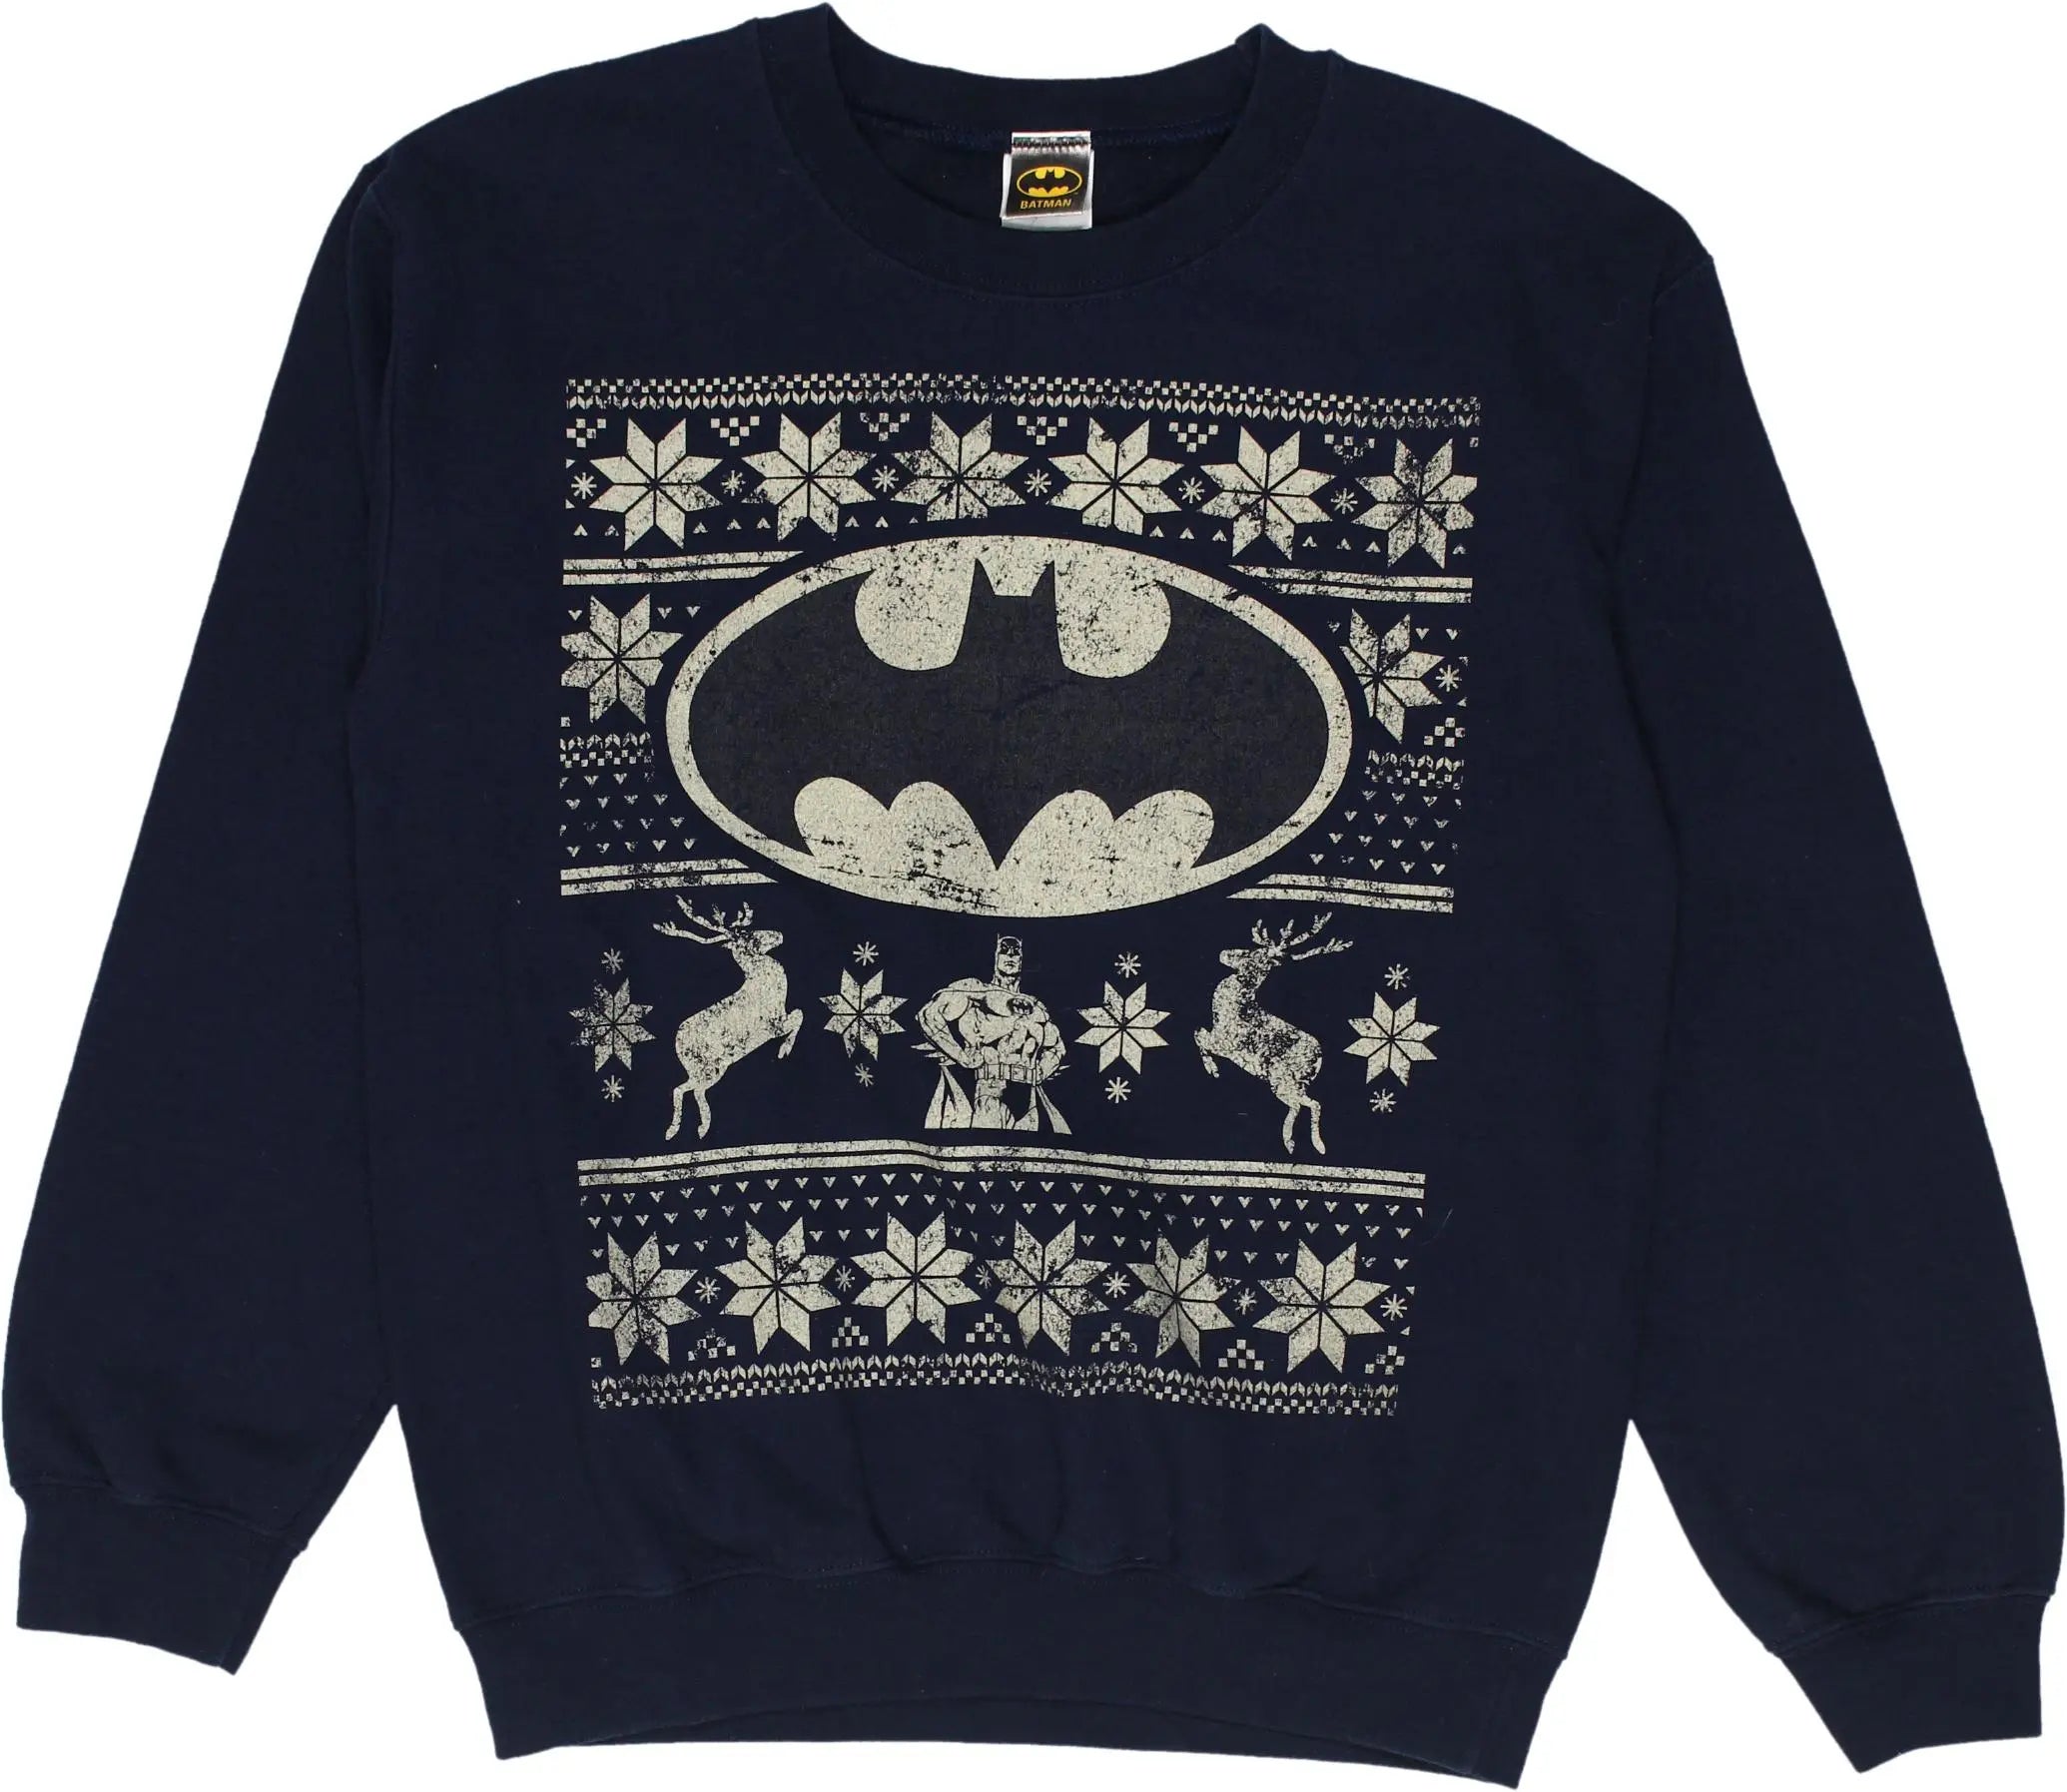 Batman - Batman Sweater- ThriftTale.com - Vintage and second handclothing